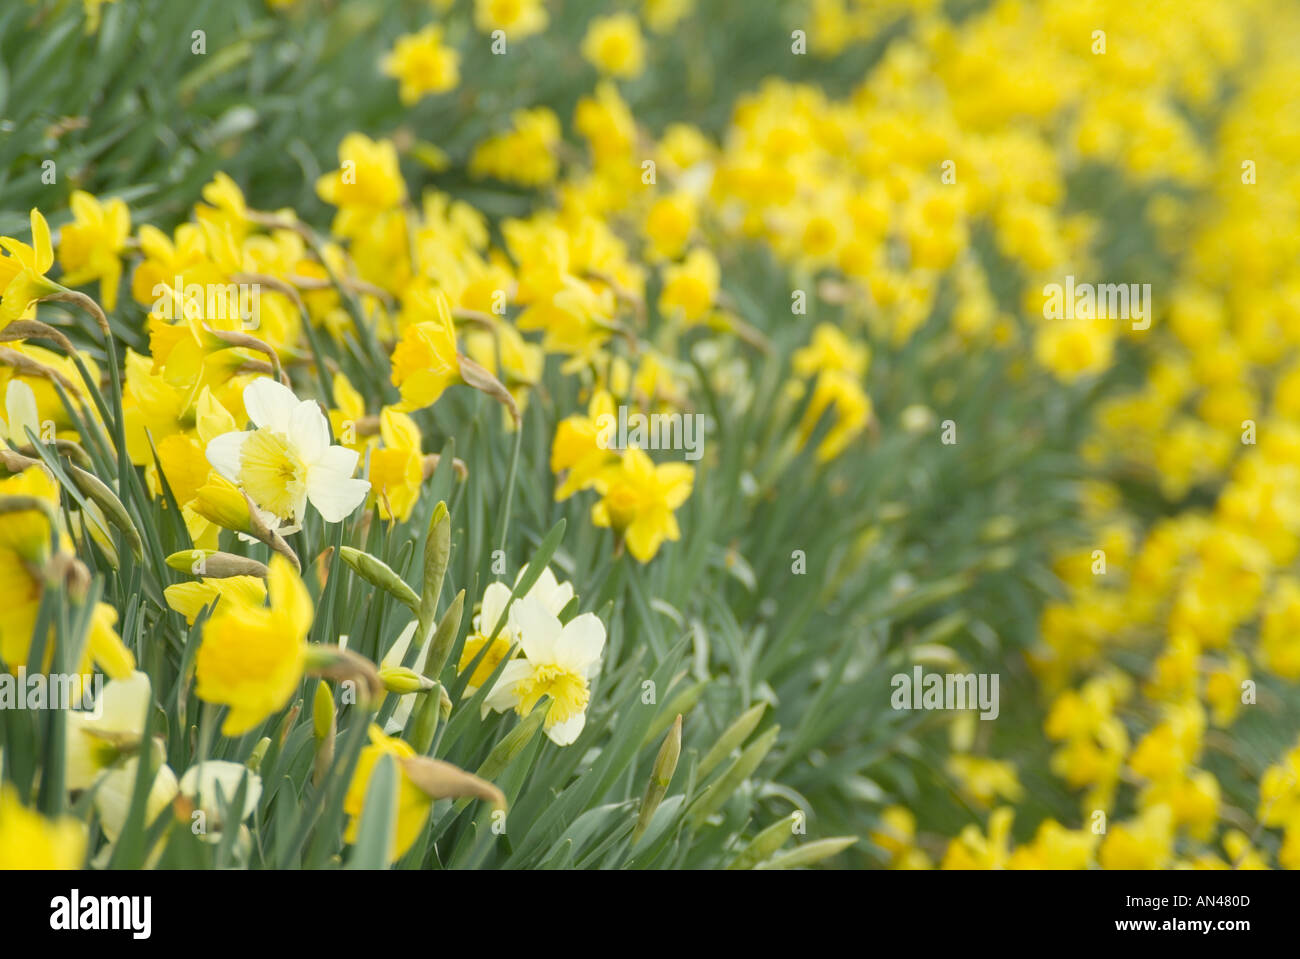 Narzissen Feld St David Tag Wales Walisisch Taffy Taff welsh Guards Blume gelb Petail Reihen wachsen Blumengeschäft Blumen Stockfoto